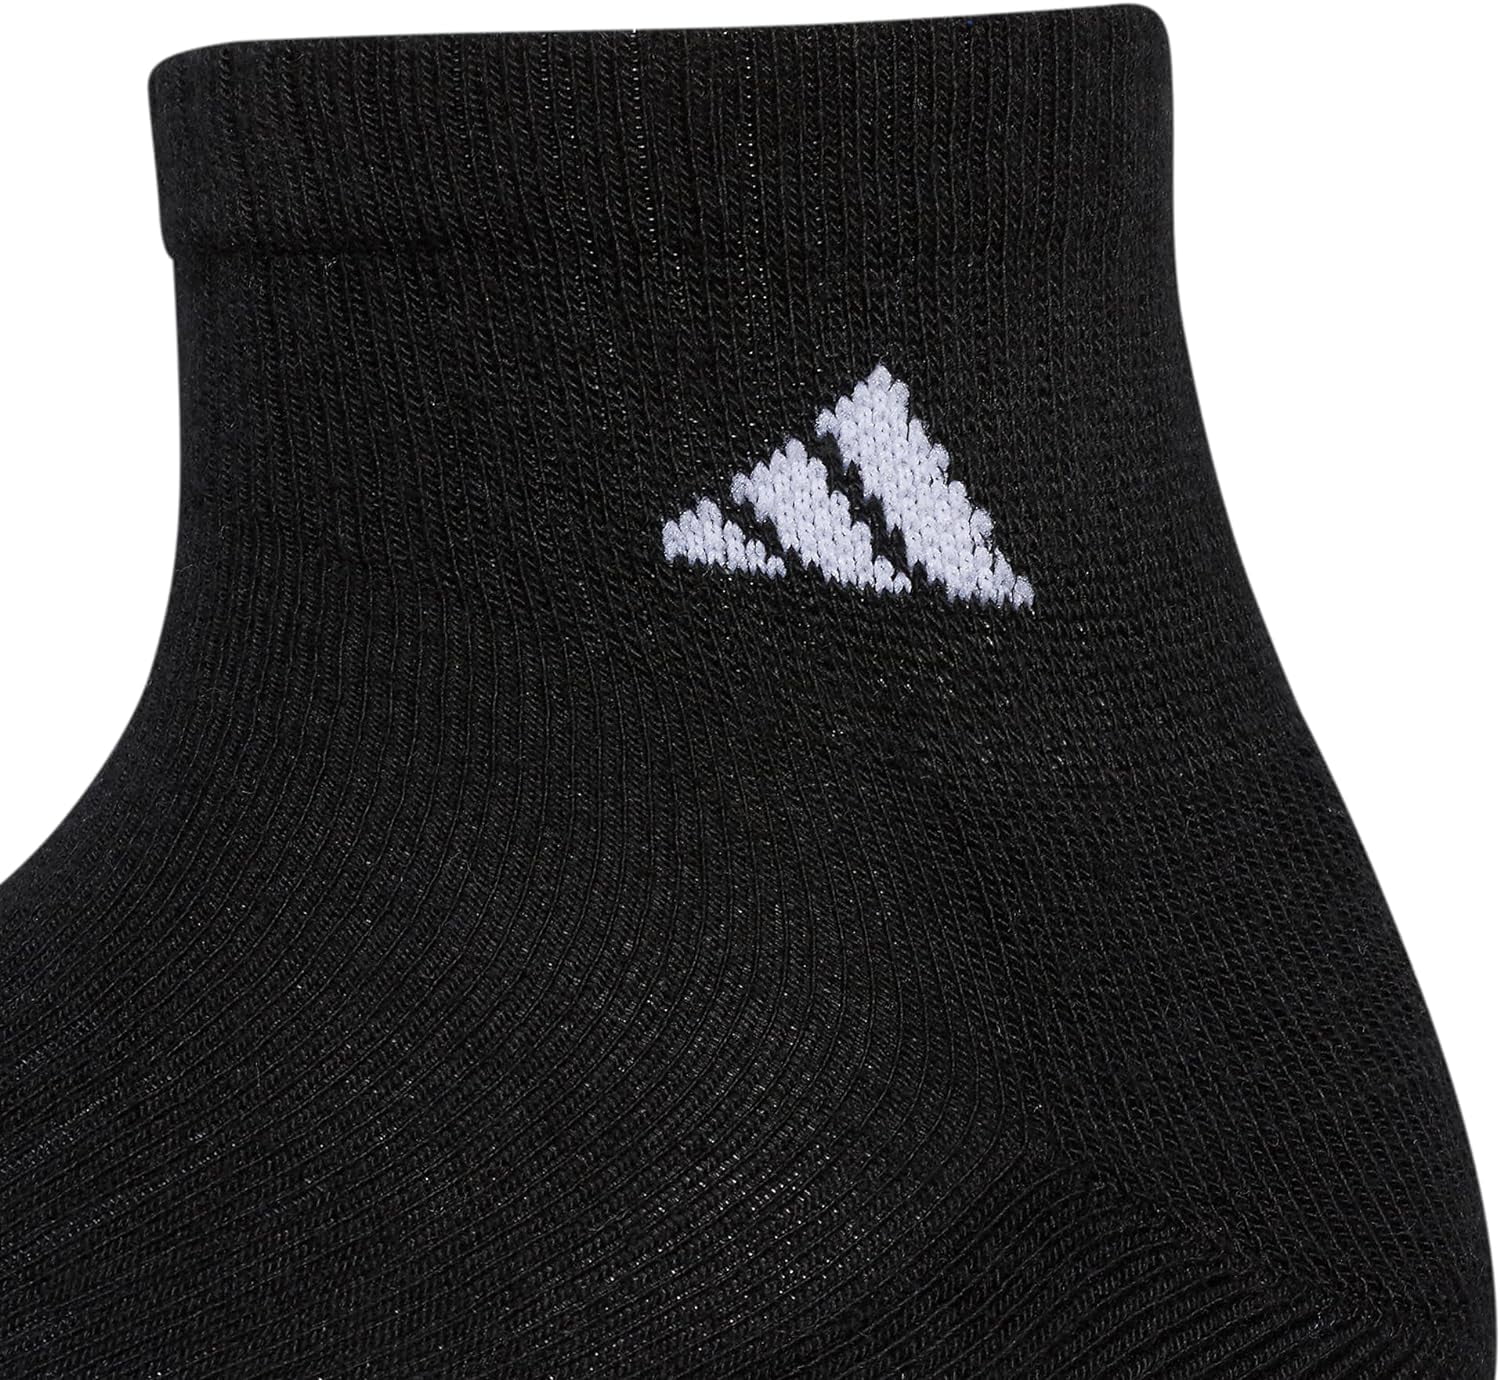 adidas Anti-Slip Socks 2 Pairs - Black